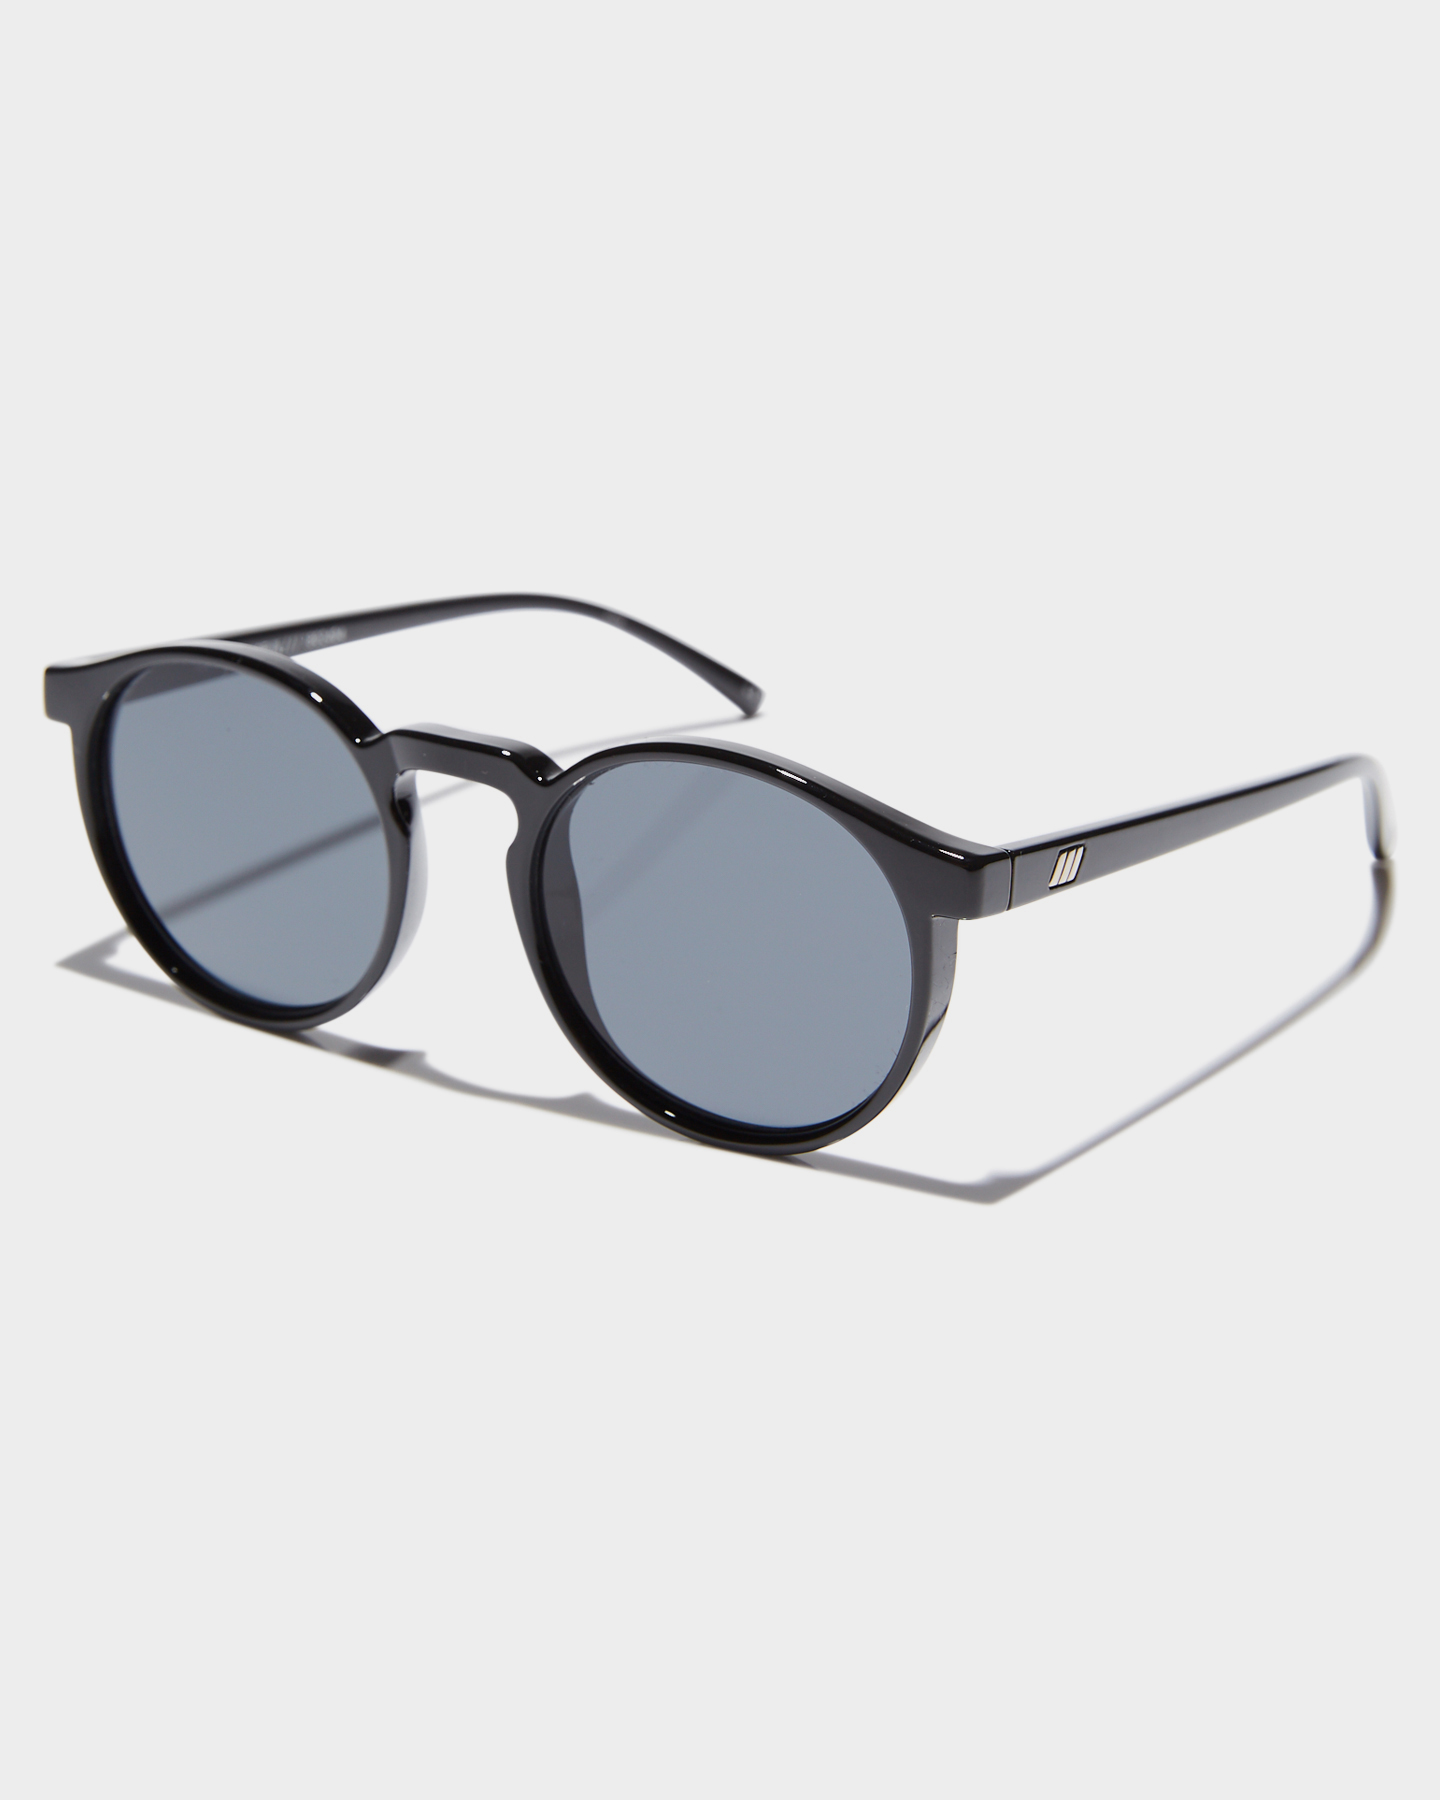 Le Specs Men's Teen Spirit Deux Sunglasses Glass Black | eBay